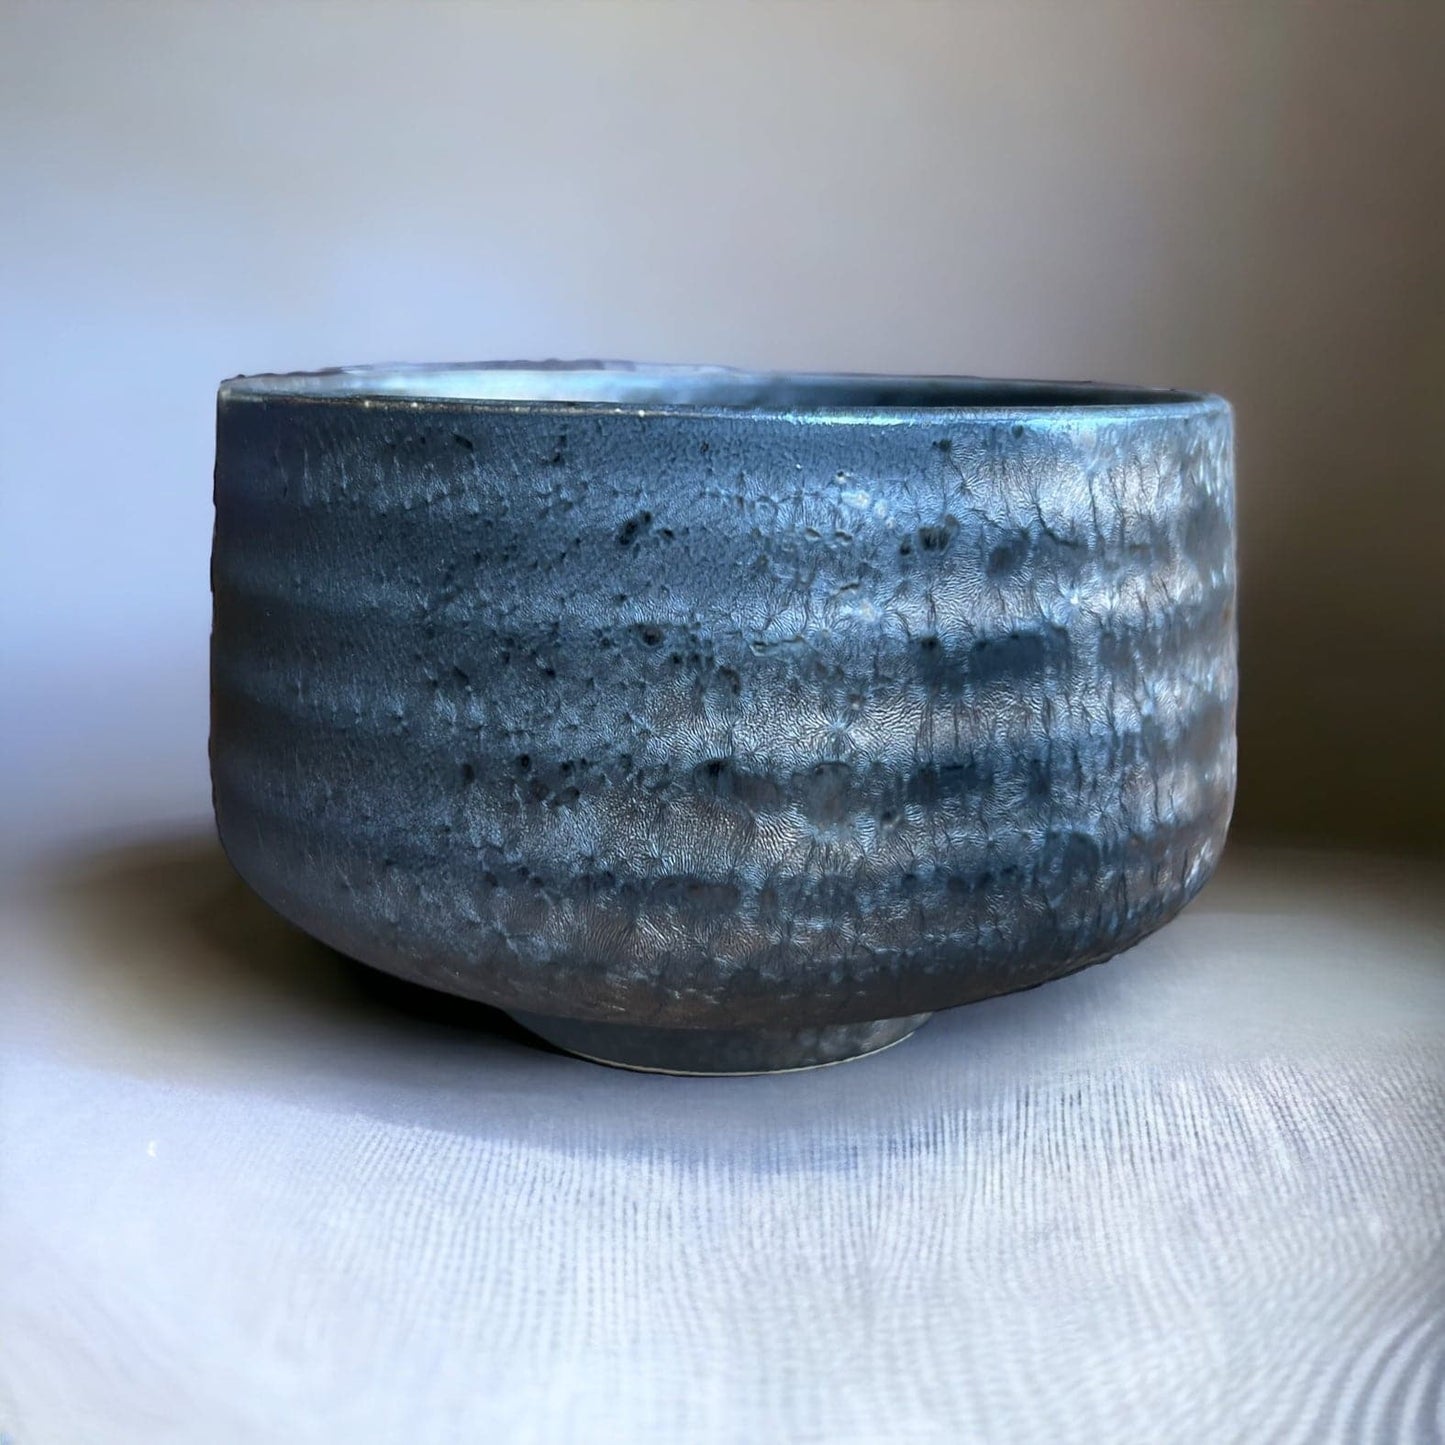 Side shot of the brushed metal matcha bowl.